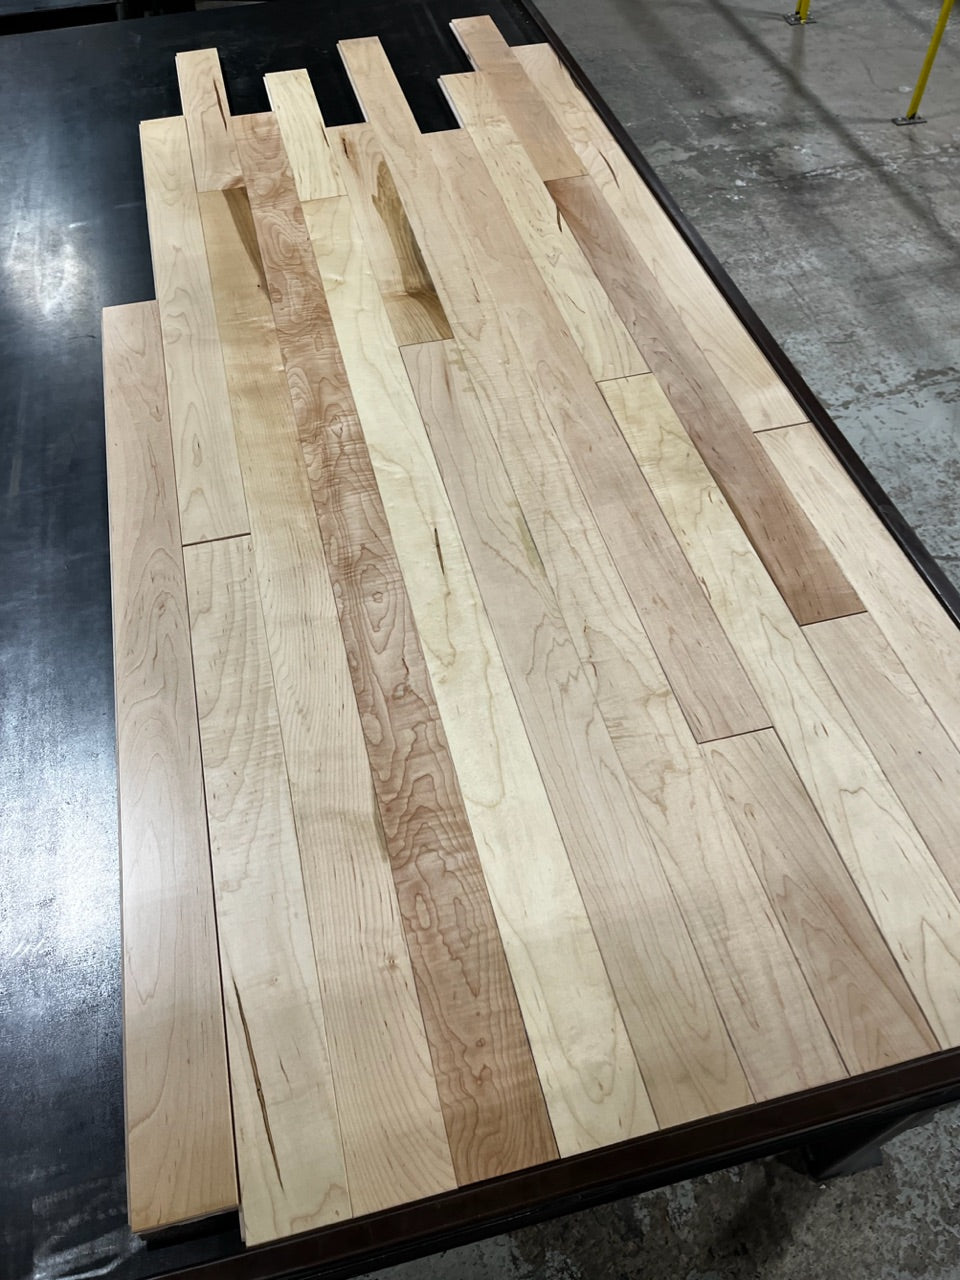 2 1/4" x 3/4" Prefinished Red Maple Natural Hardwood Flooring